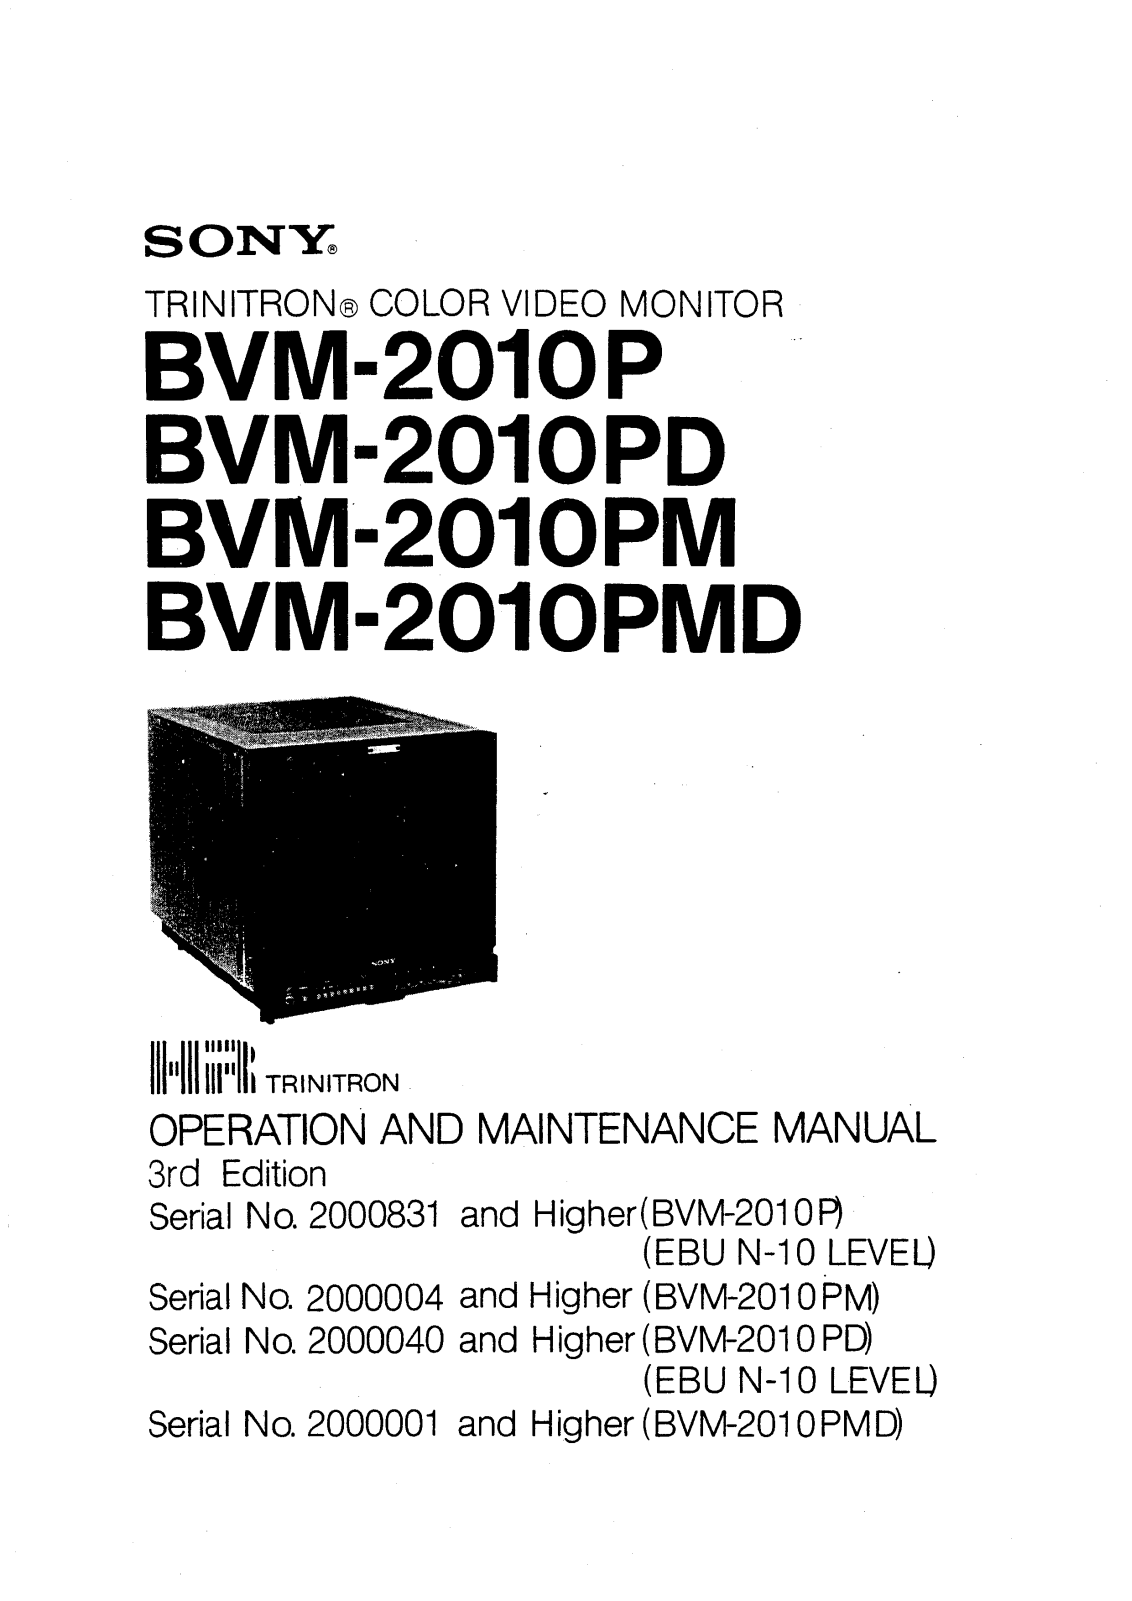 Sony BVM-2010P, BVM-2010PD, BVM-2010PM, BVM-2010PMD Service Manual